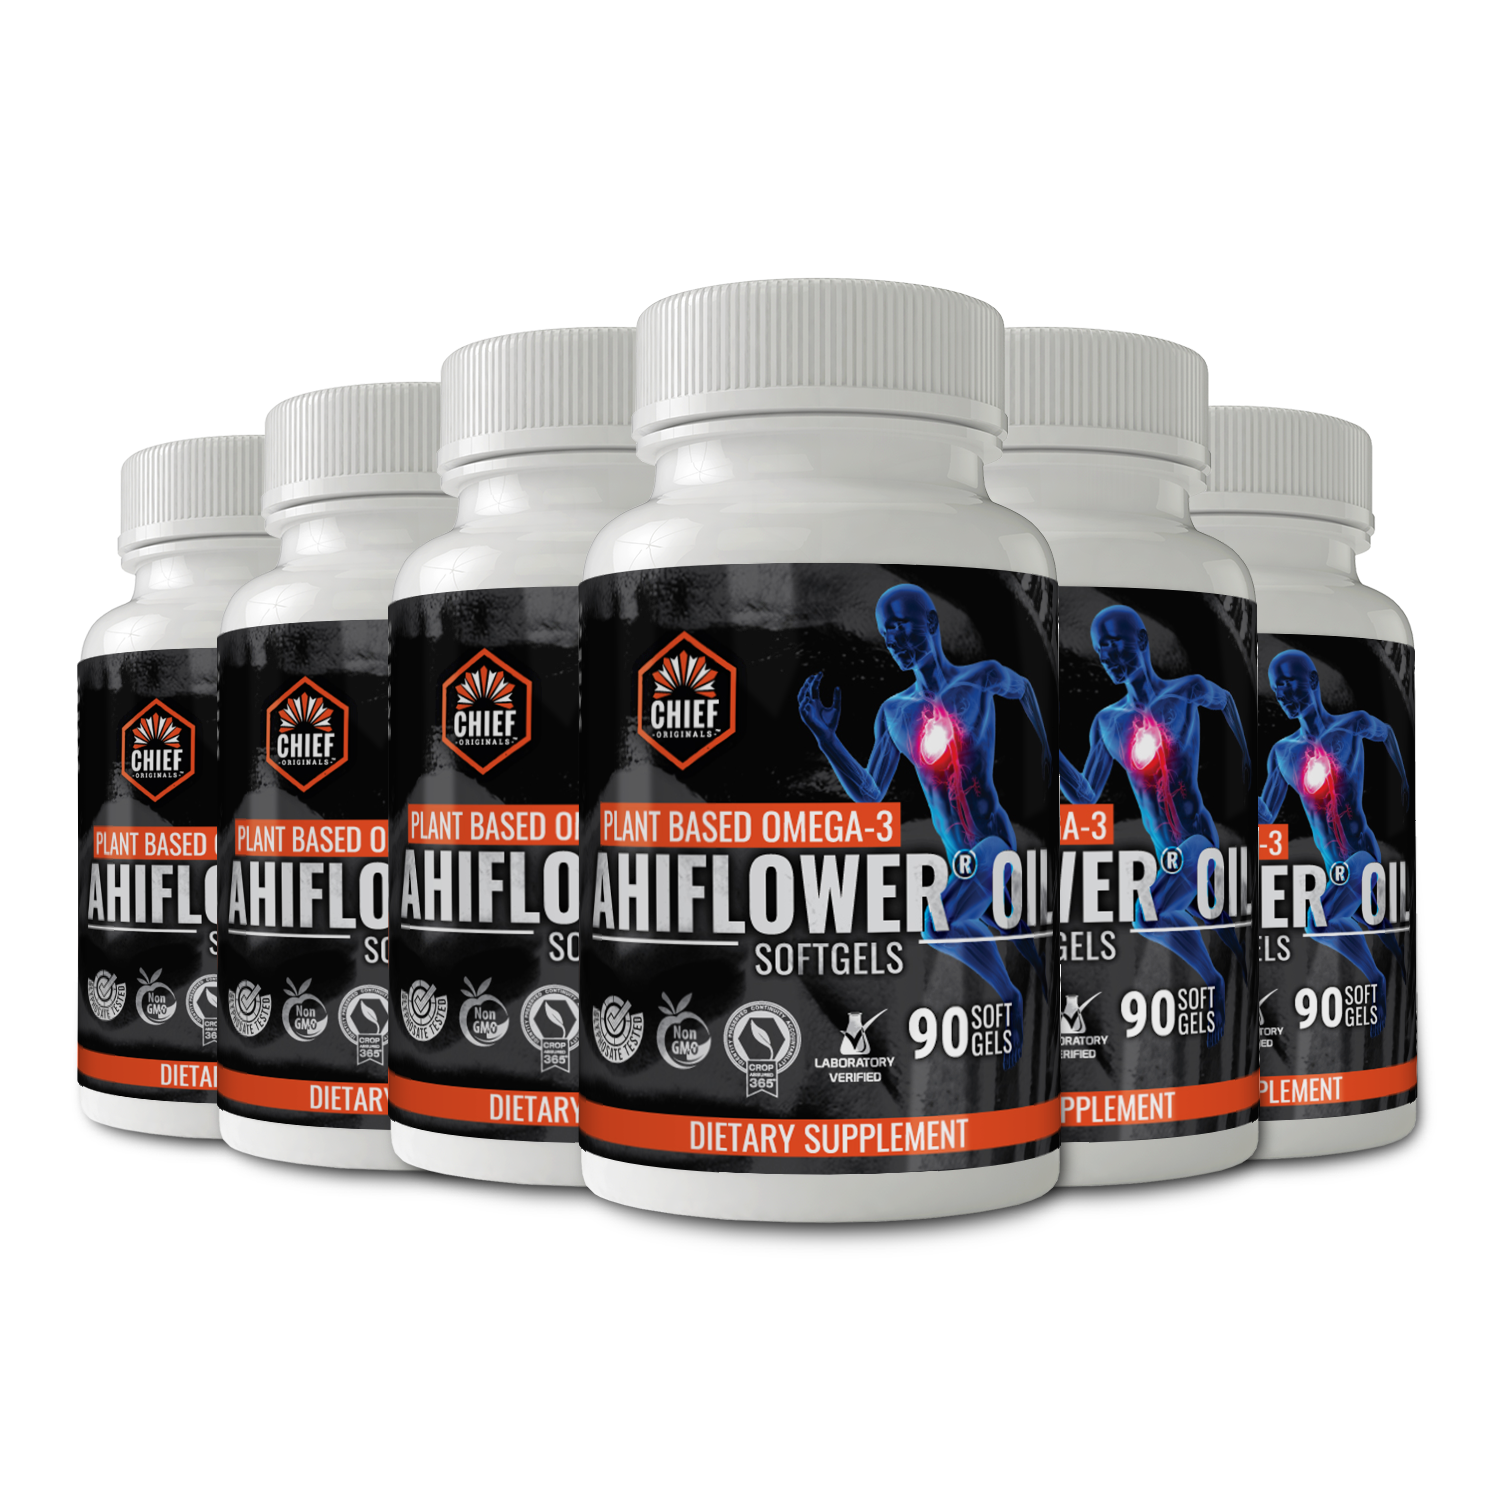 Ahiflower Oil 90 Softgels (6-Pack) - Plant-Based Omega 3-6-9